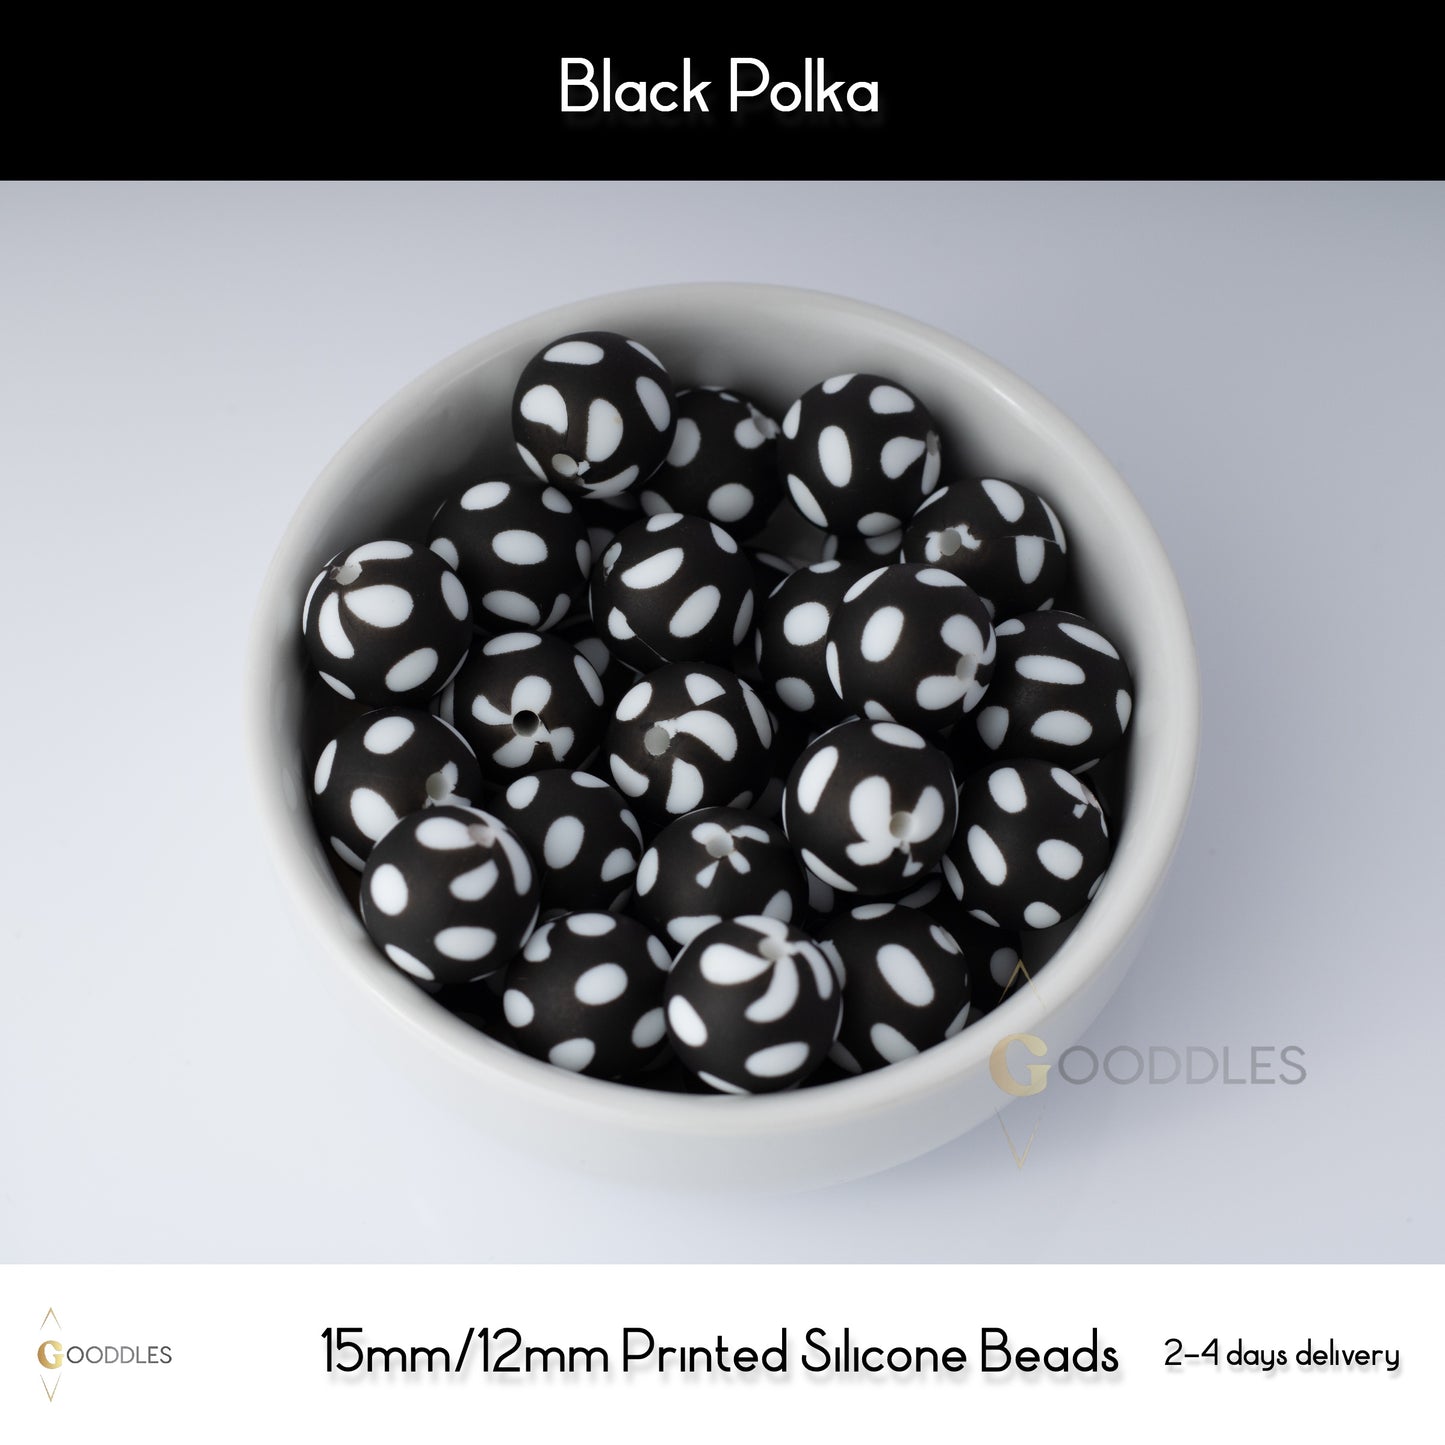 5pcs, Black Polka Silicone Beads Printed Round Silicone Beads